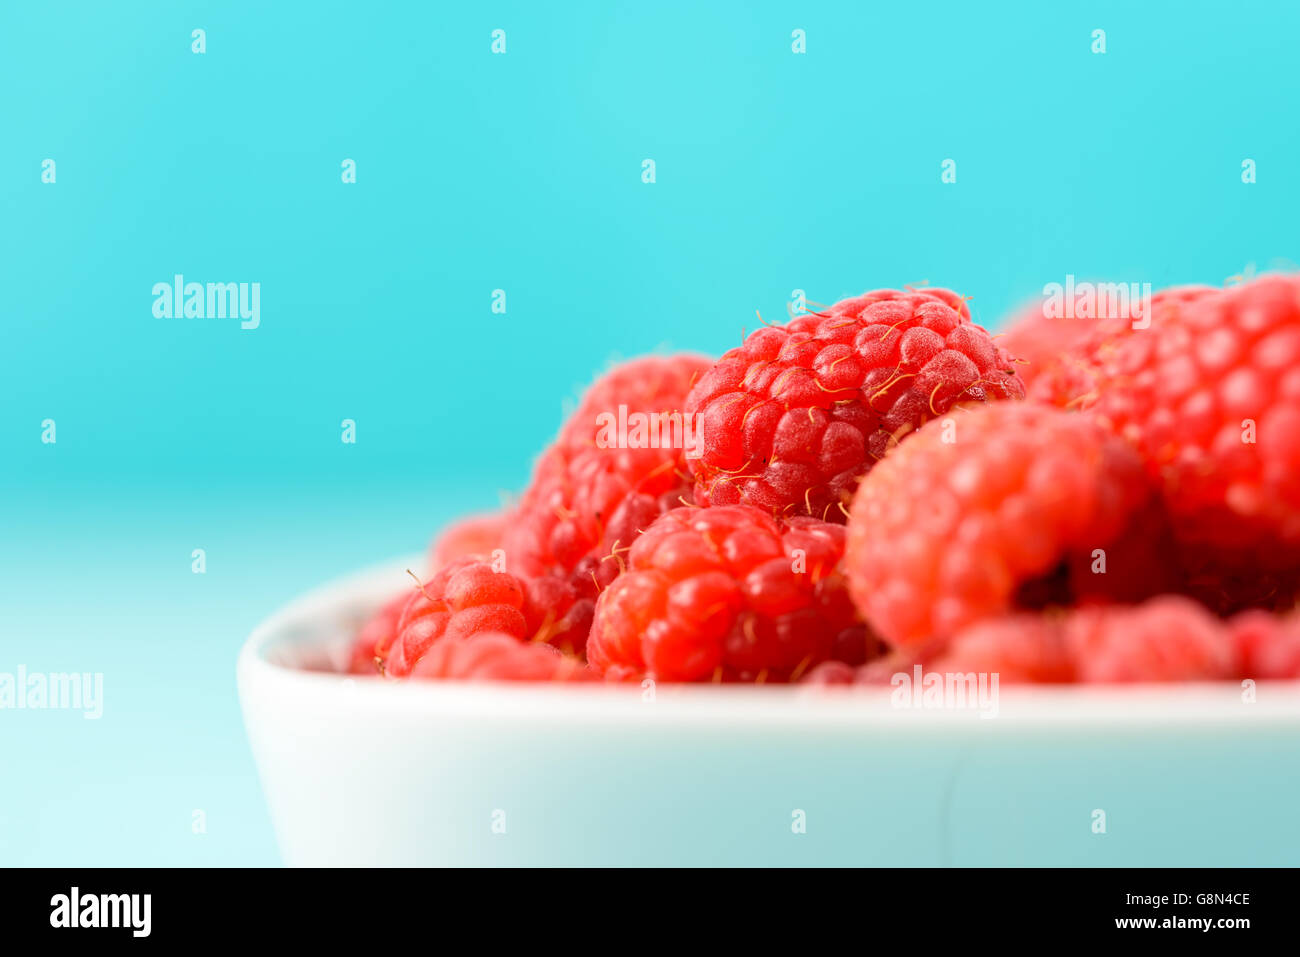 White Bowl Of Red Fresh Raspberries Stock Photo